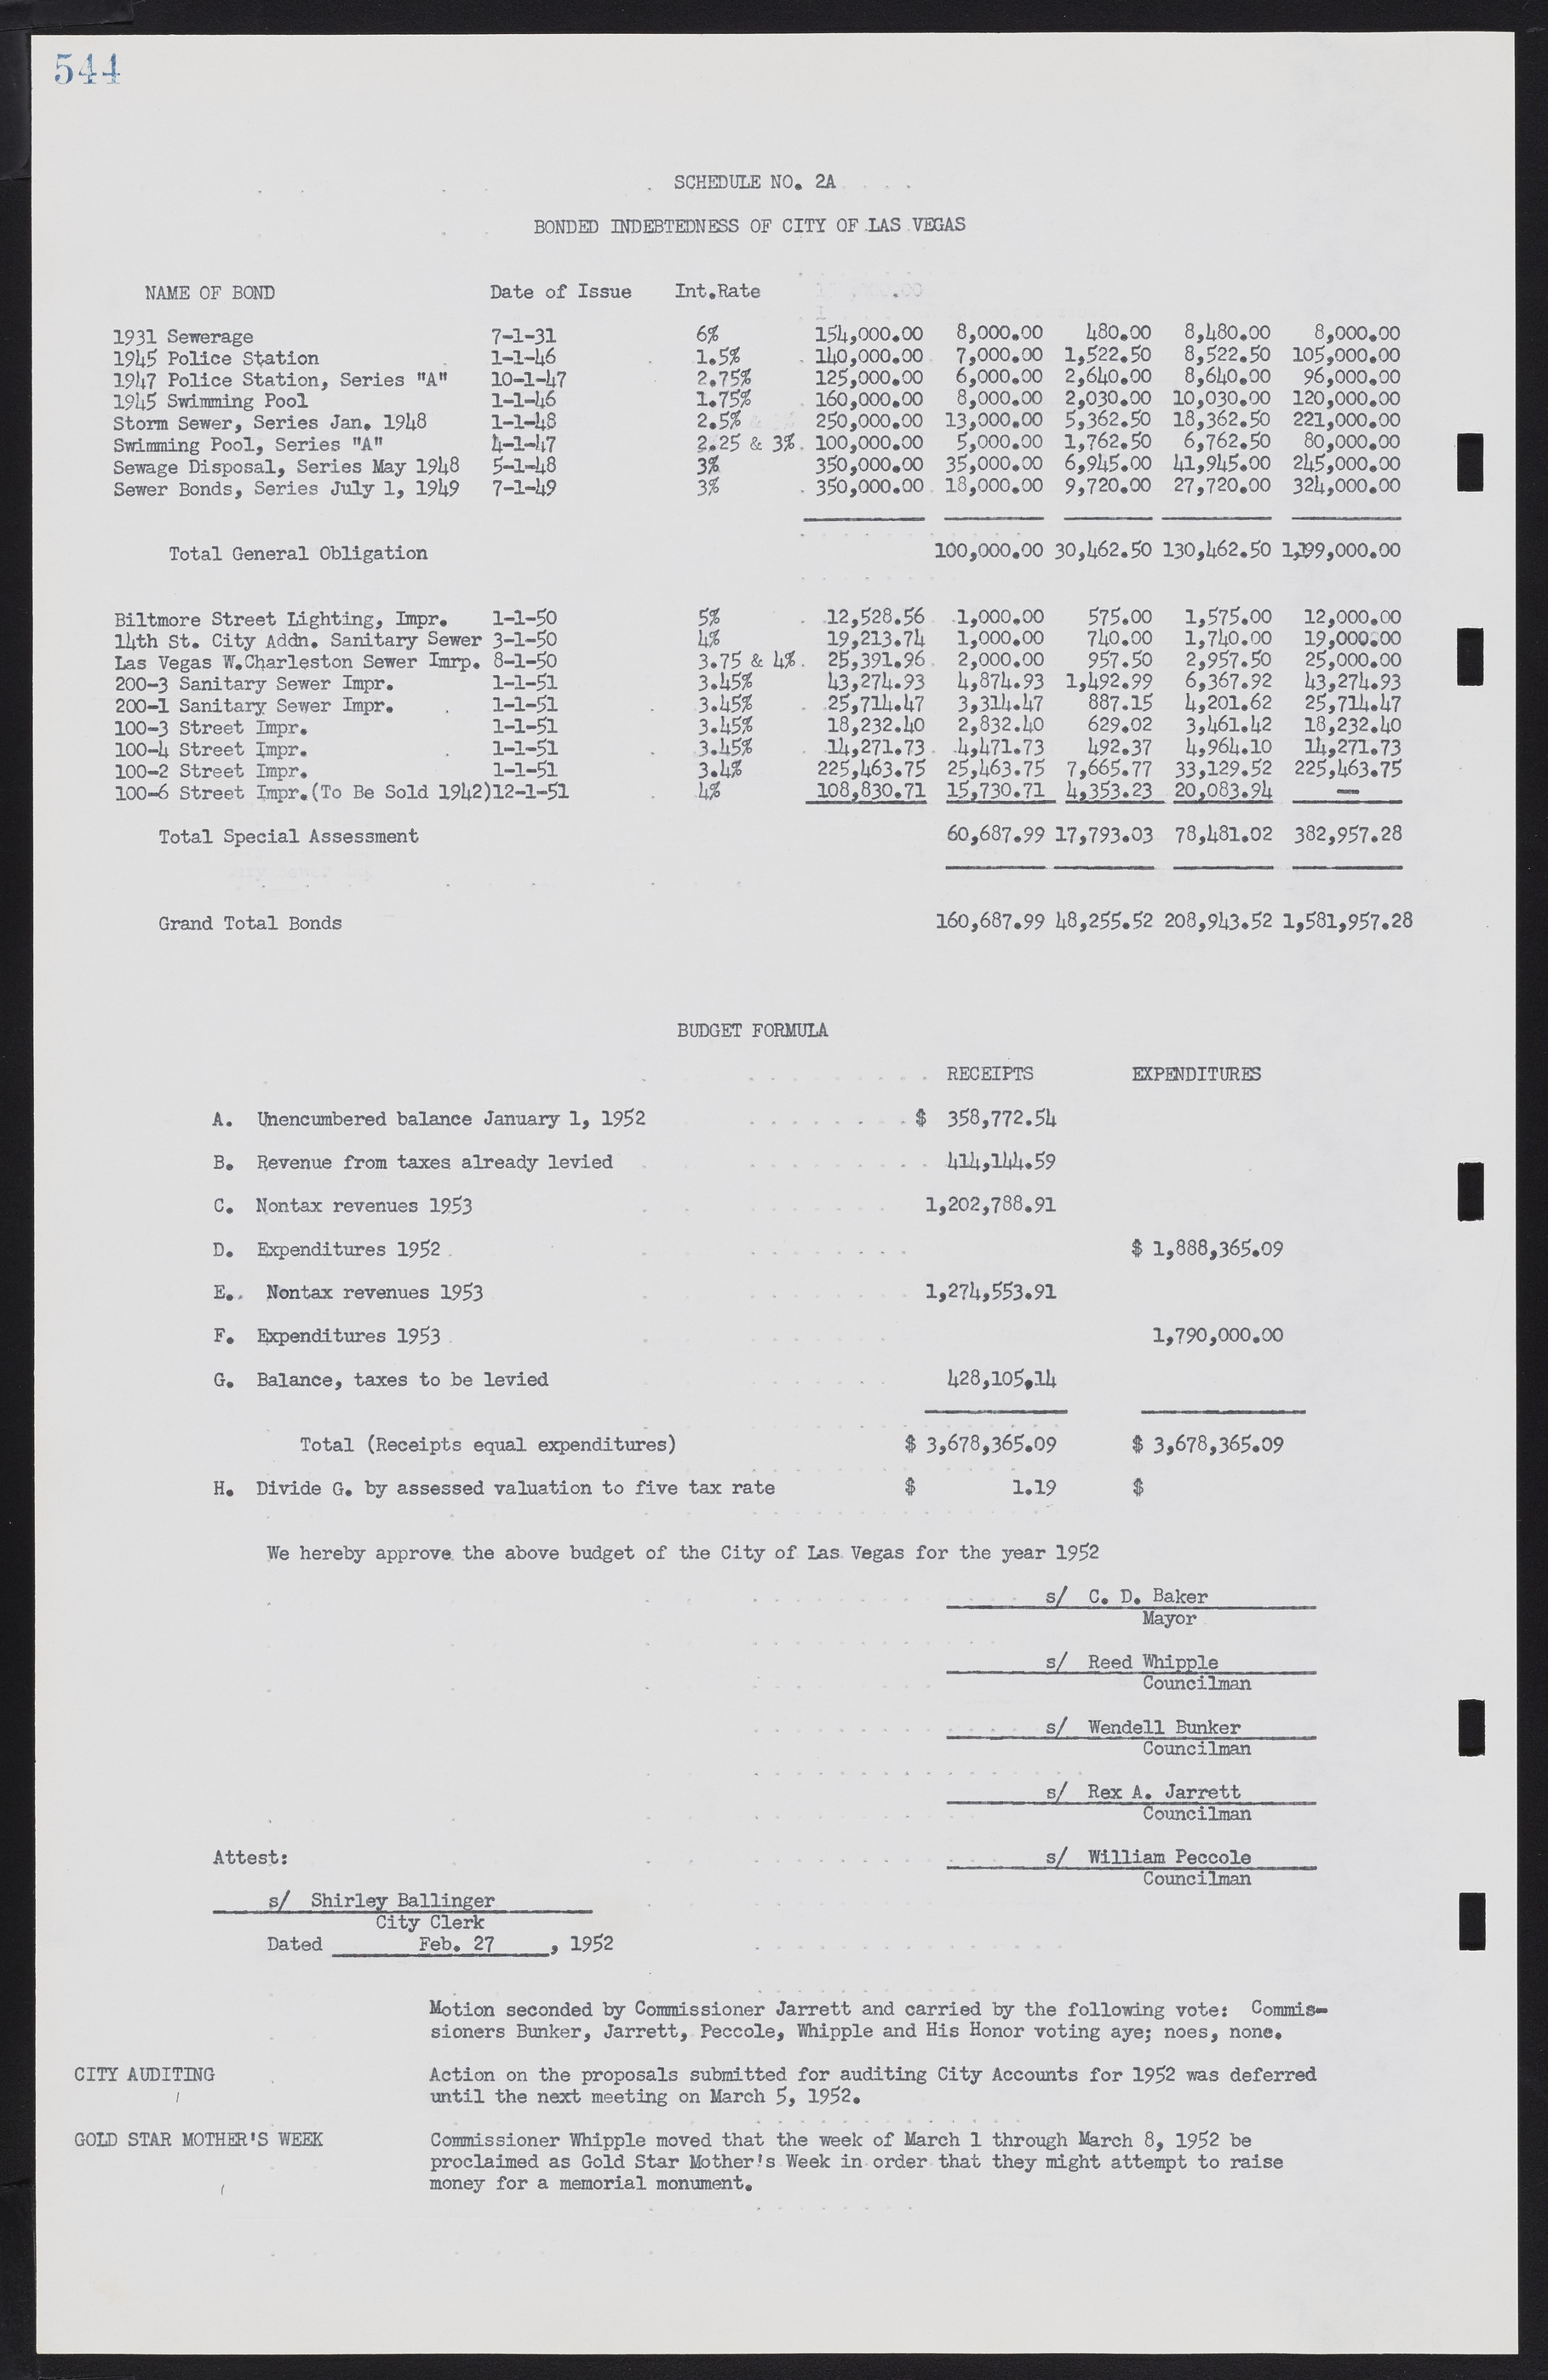 Las Vegas City Commission Minutes, November 7, 1949 to May 21, 1952, lvc000007-562